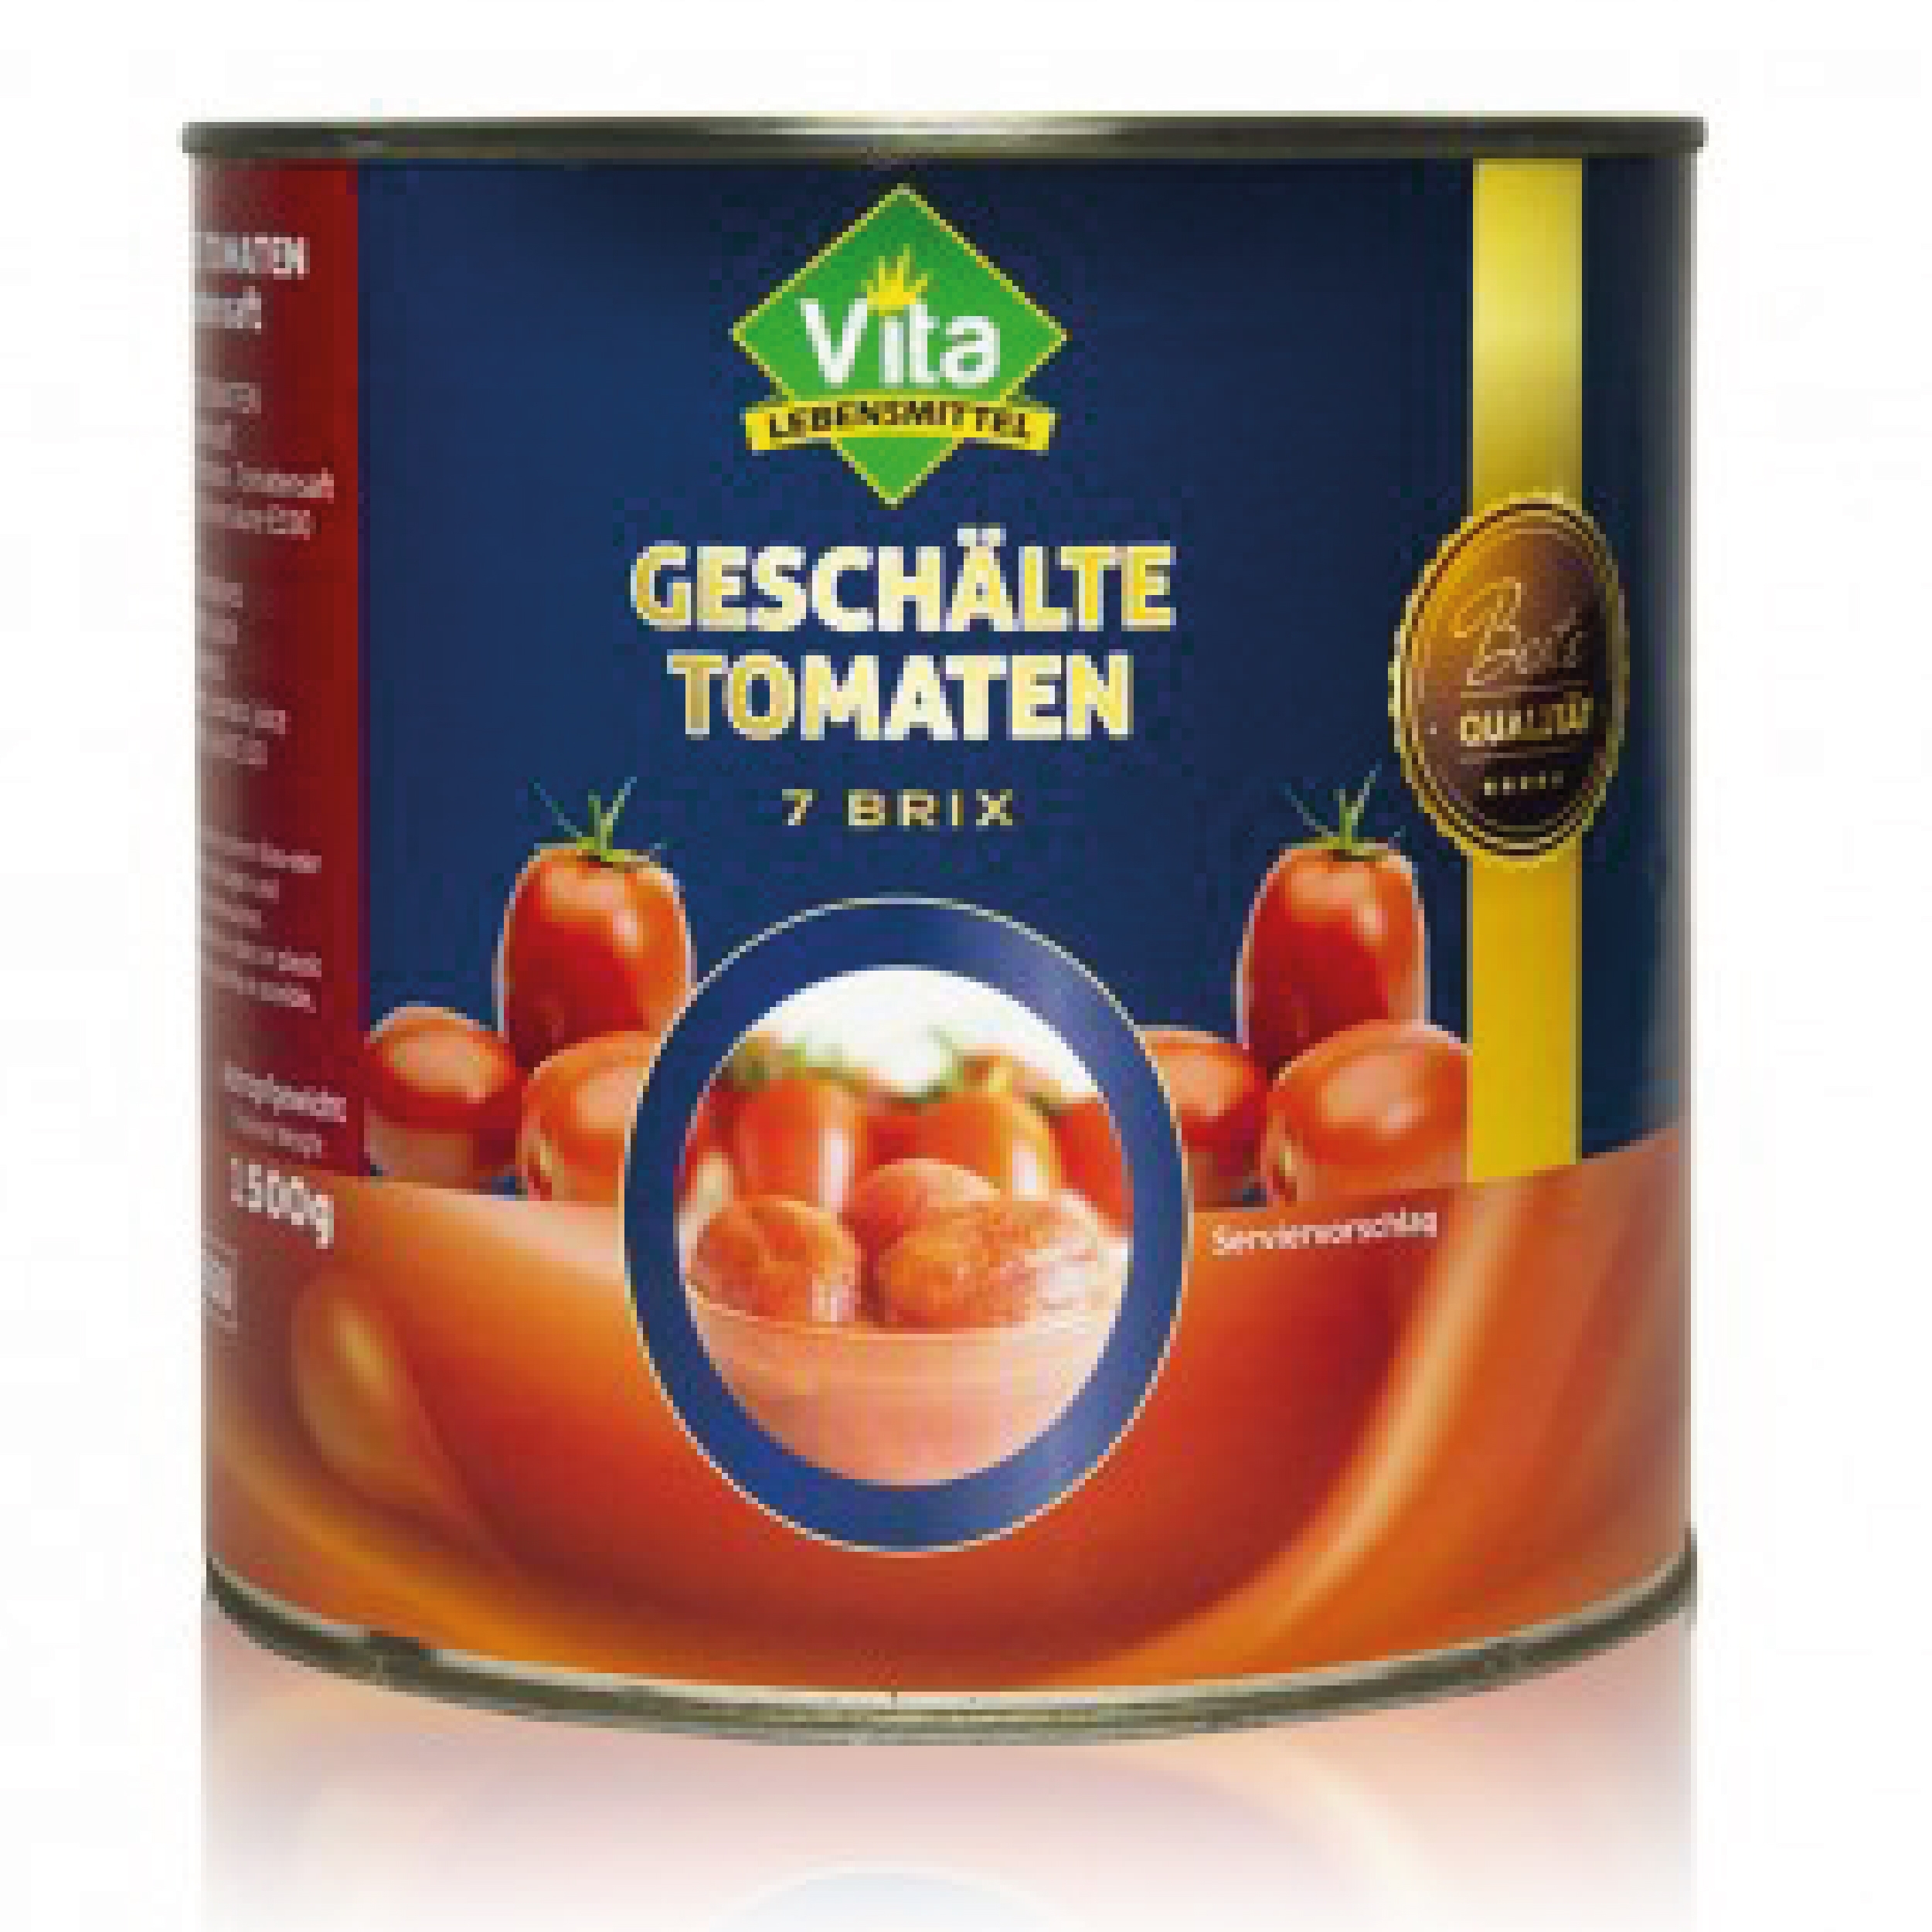 "VITA" Tomaten Geschält (2500gr/dose, 7 Brix)